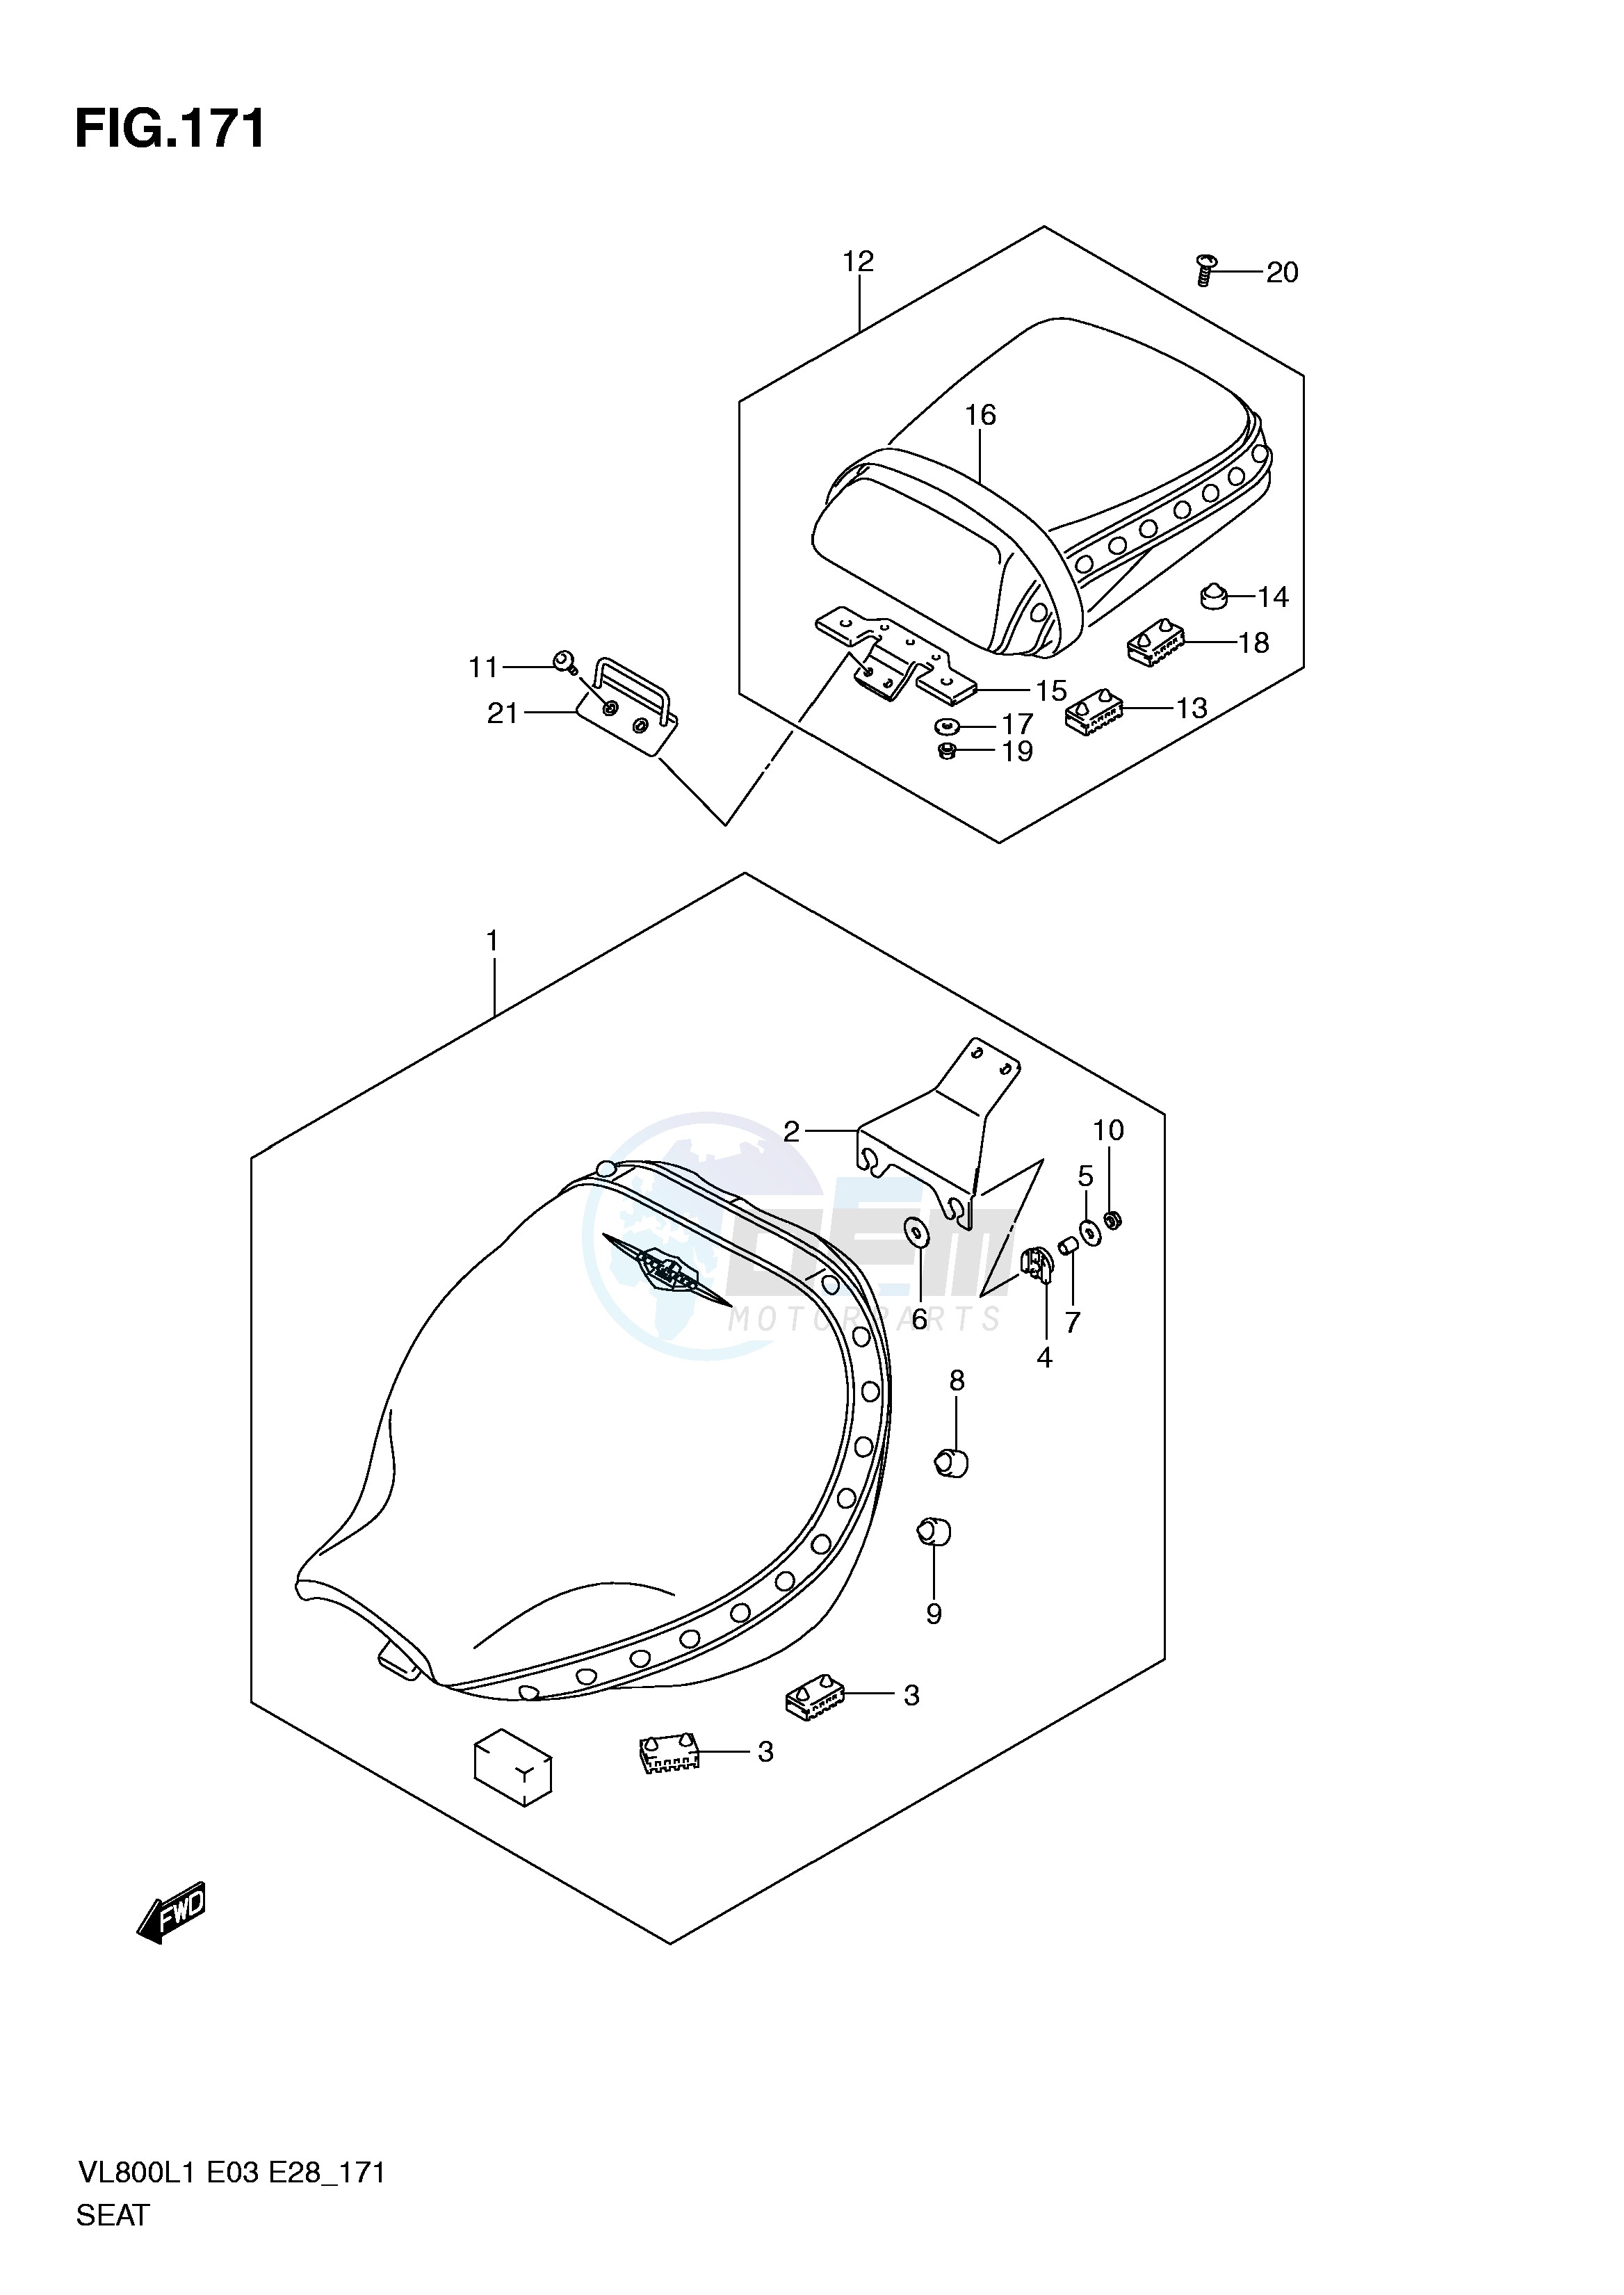 SEAT (VL800TL1 E28) blueprint